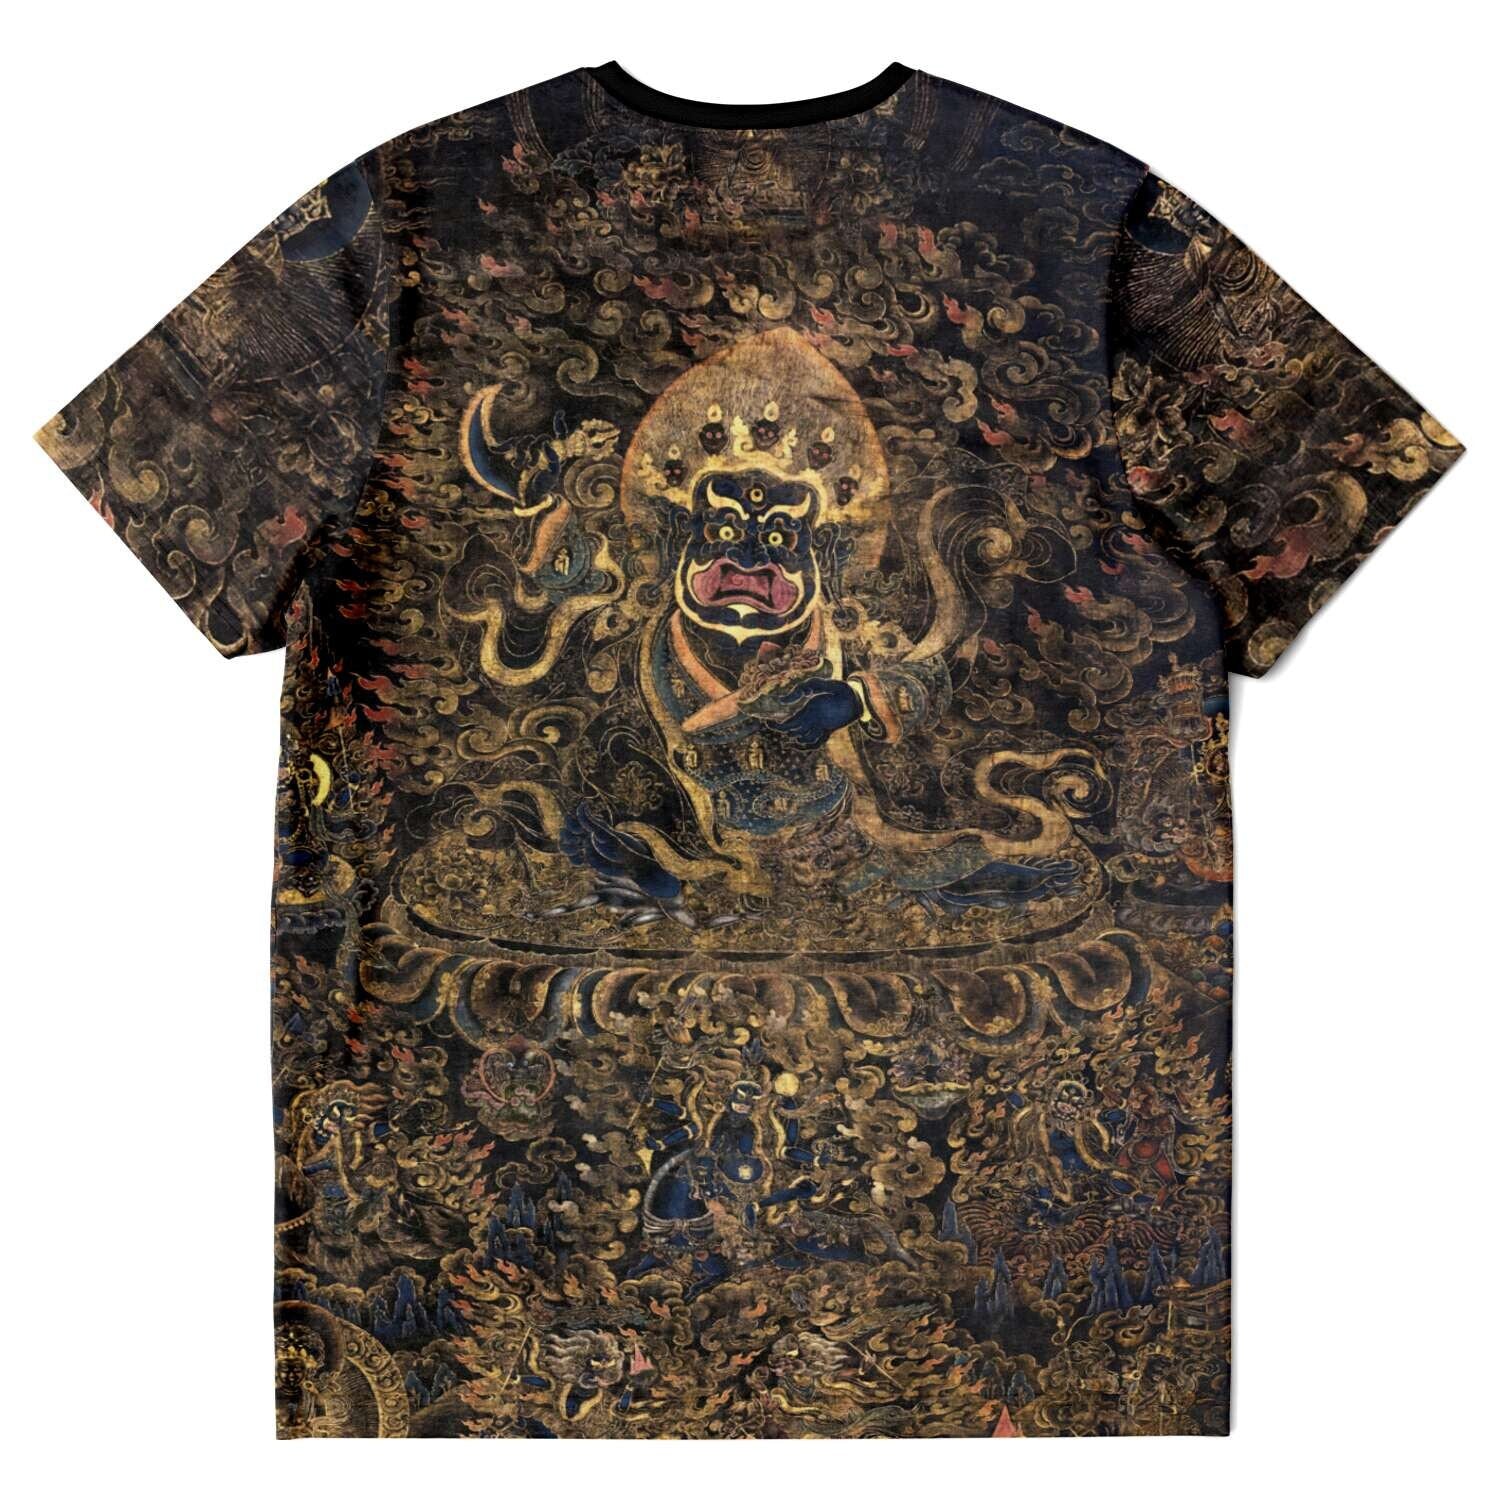 T-shirt Gold and Black Mahakala Holding a Skull  Tibetan Thangka, Nepal, Tantric Vintage Buddhist T-Shirt Tee